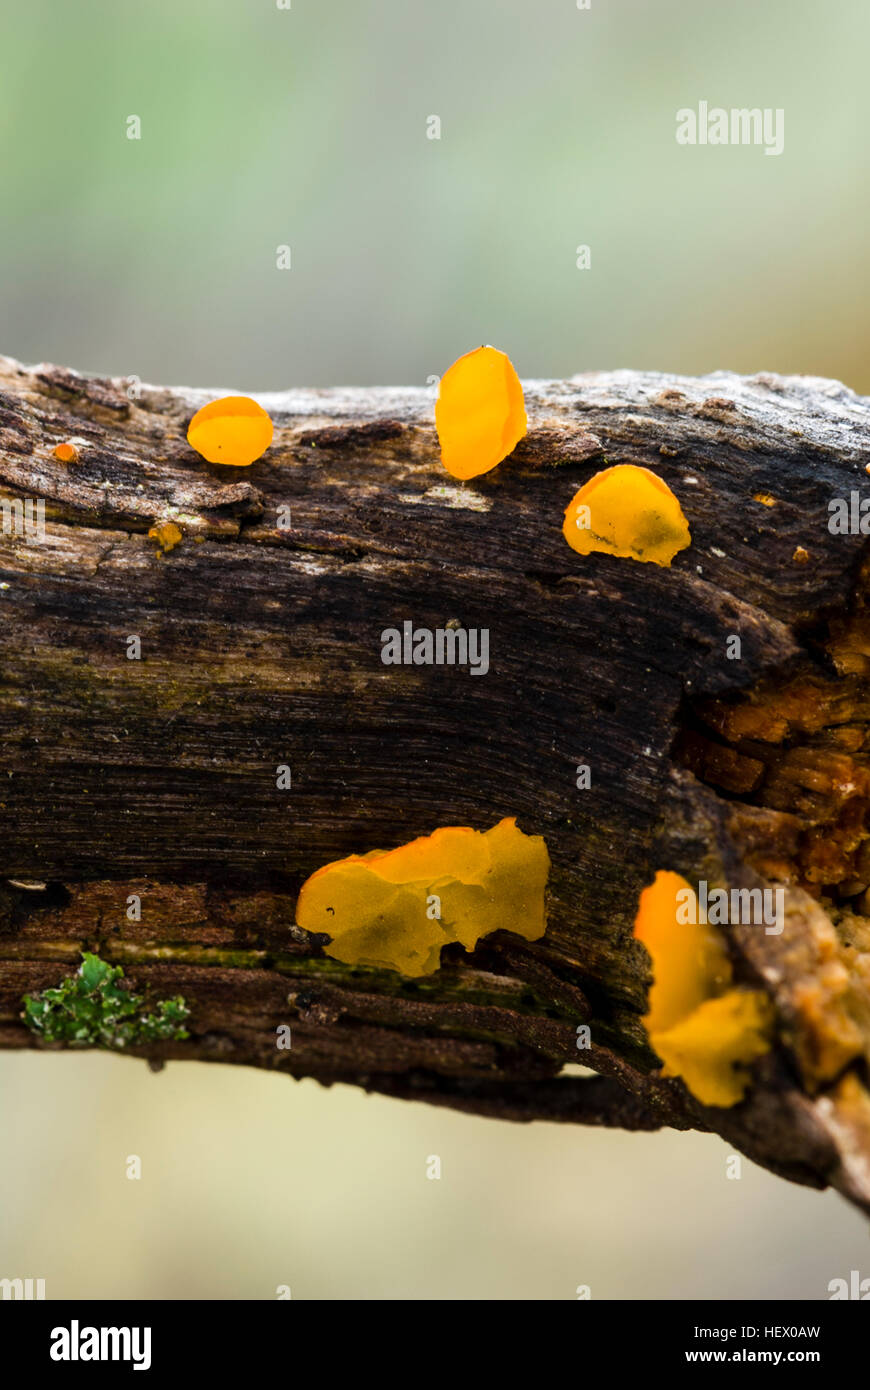 Gelatina de naranja brillante hongos húmedo crece sobre un tocón de árbol. Foto de stock